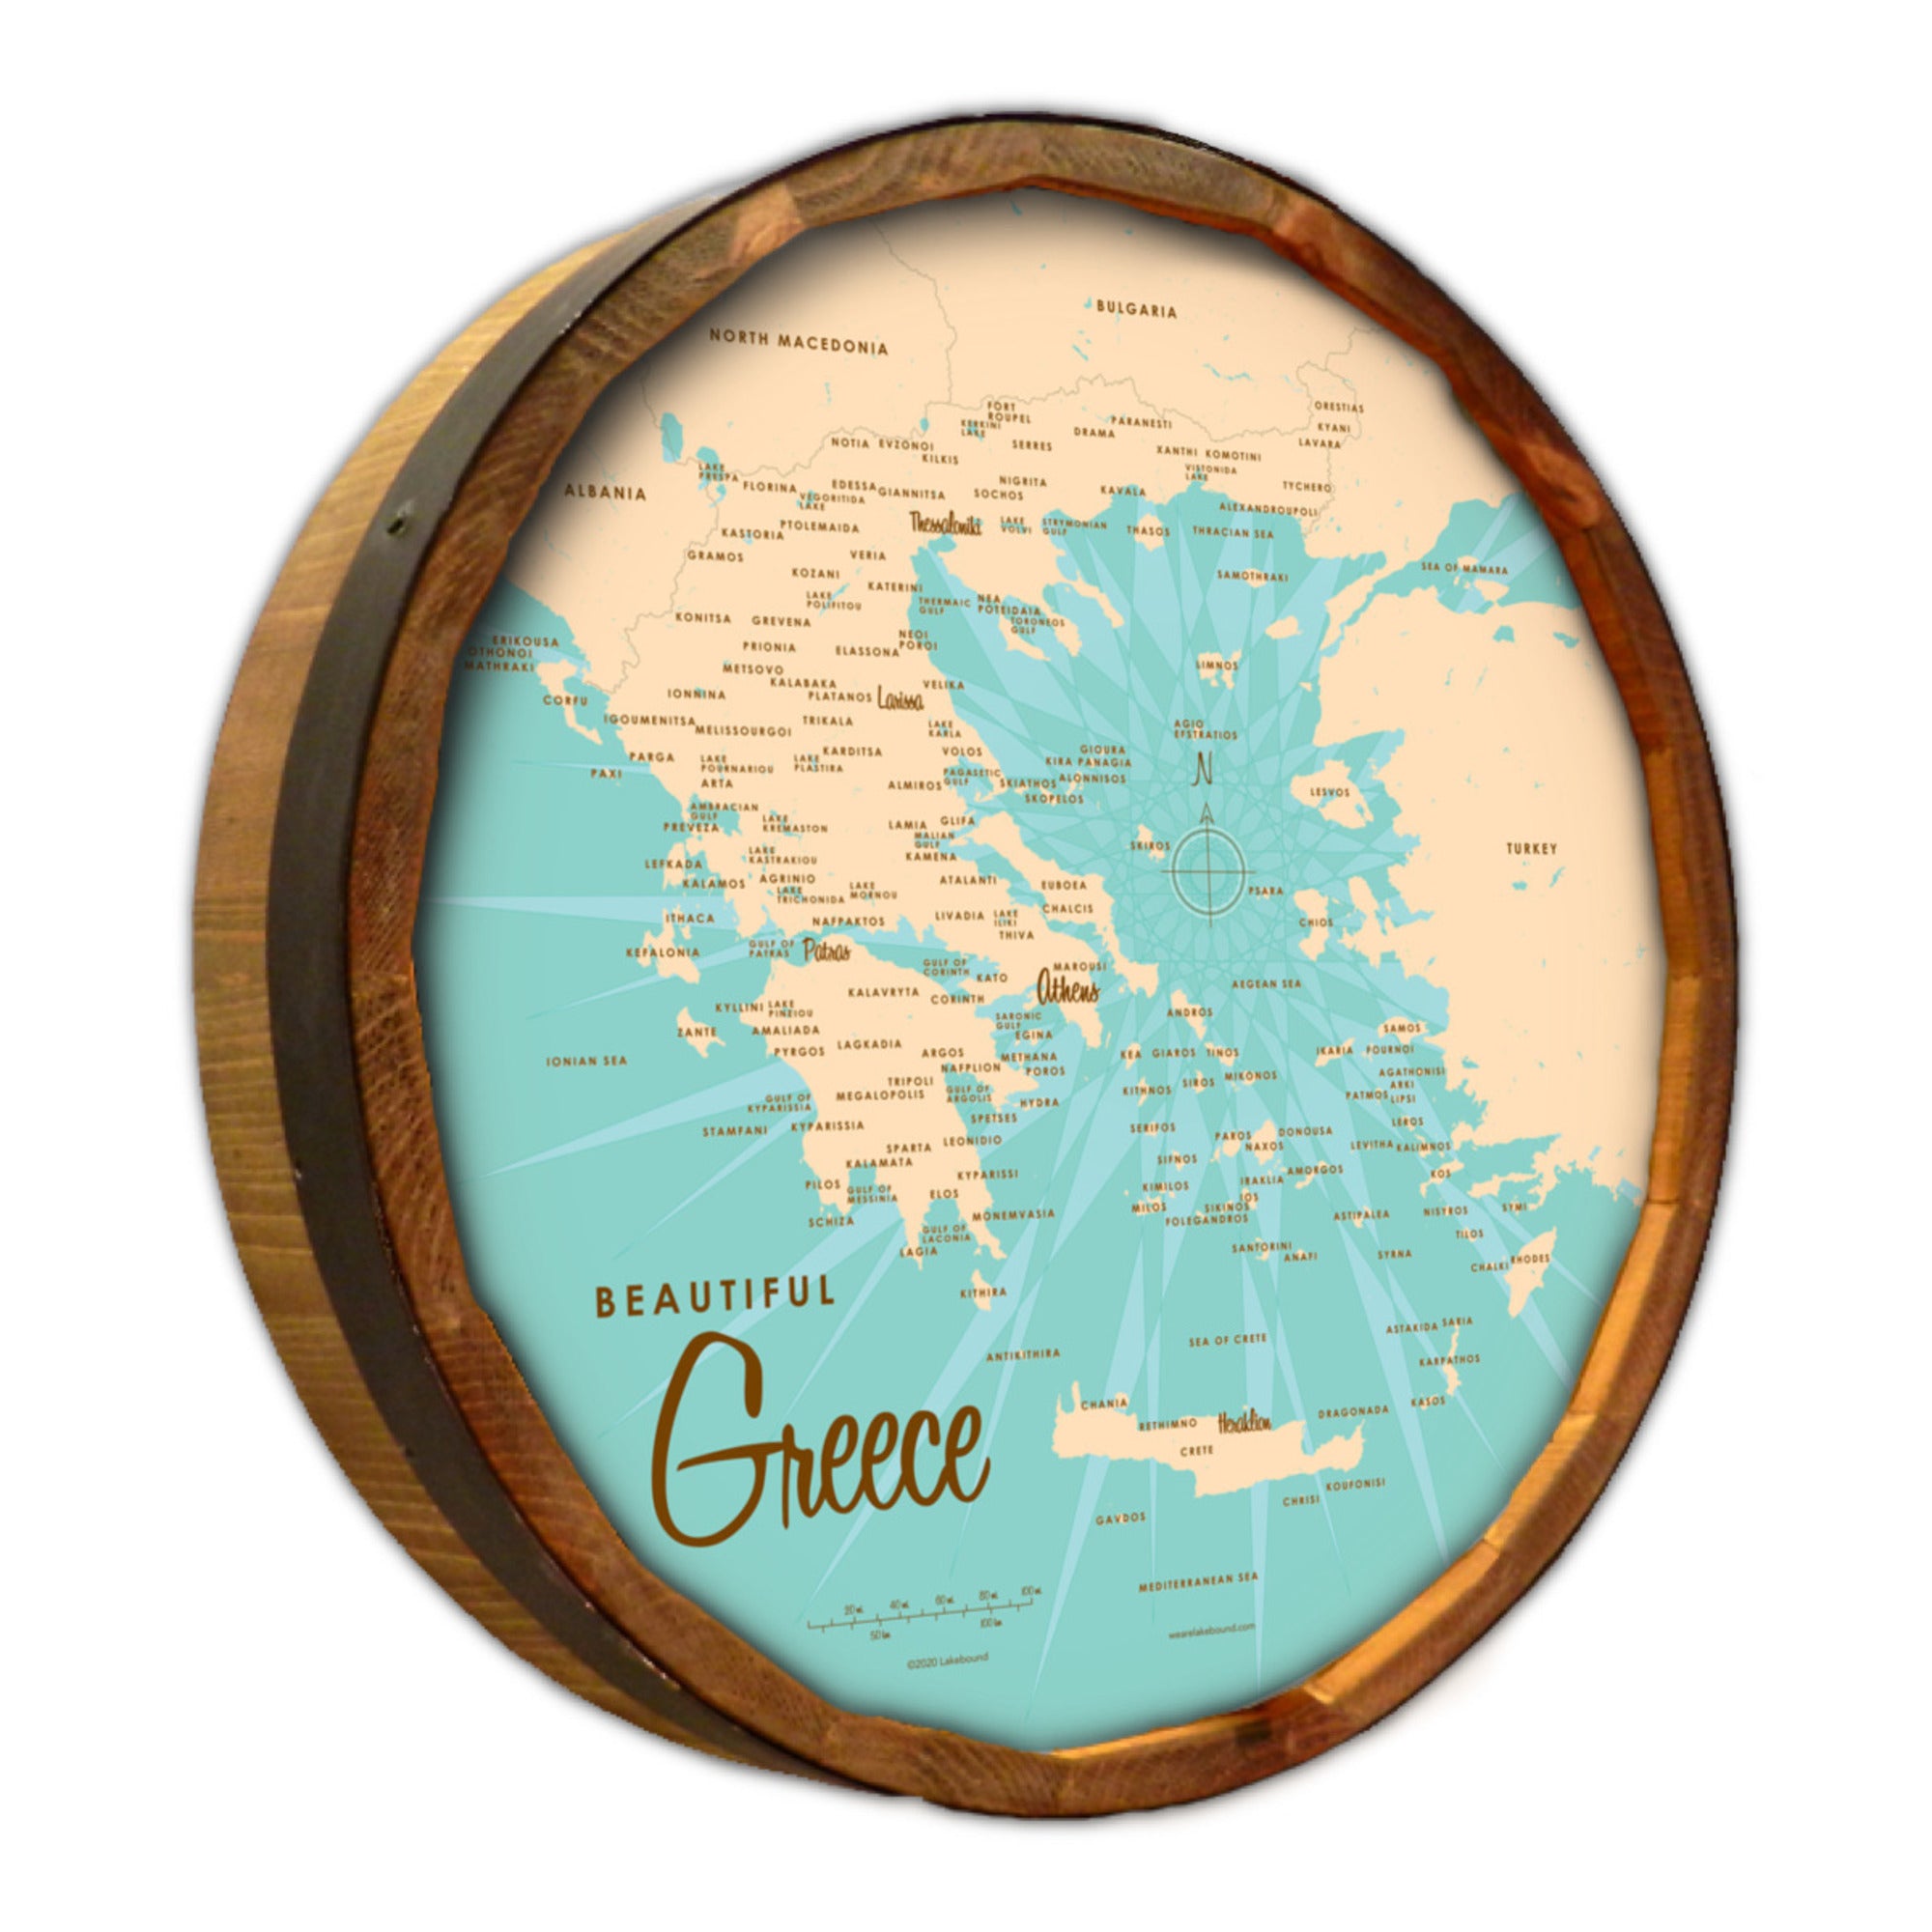 Greece, Barrel End Map Art